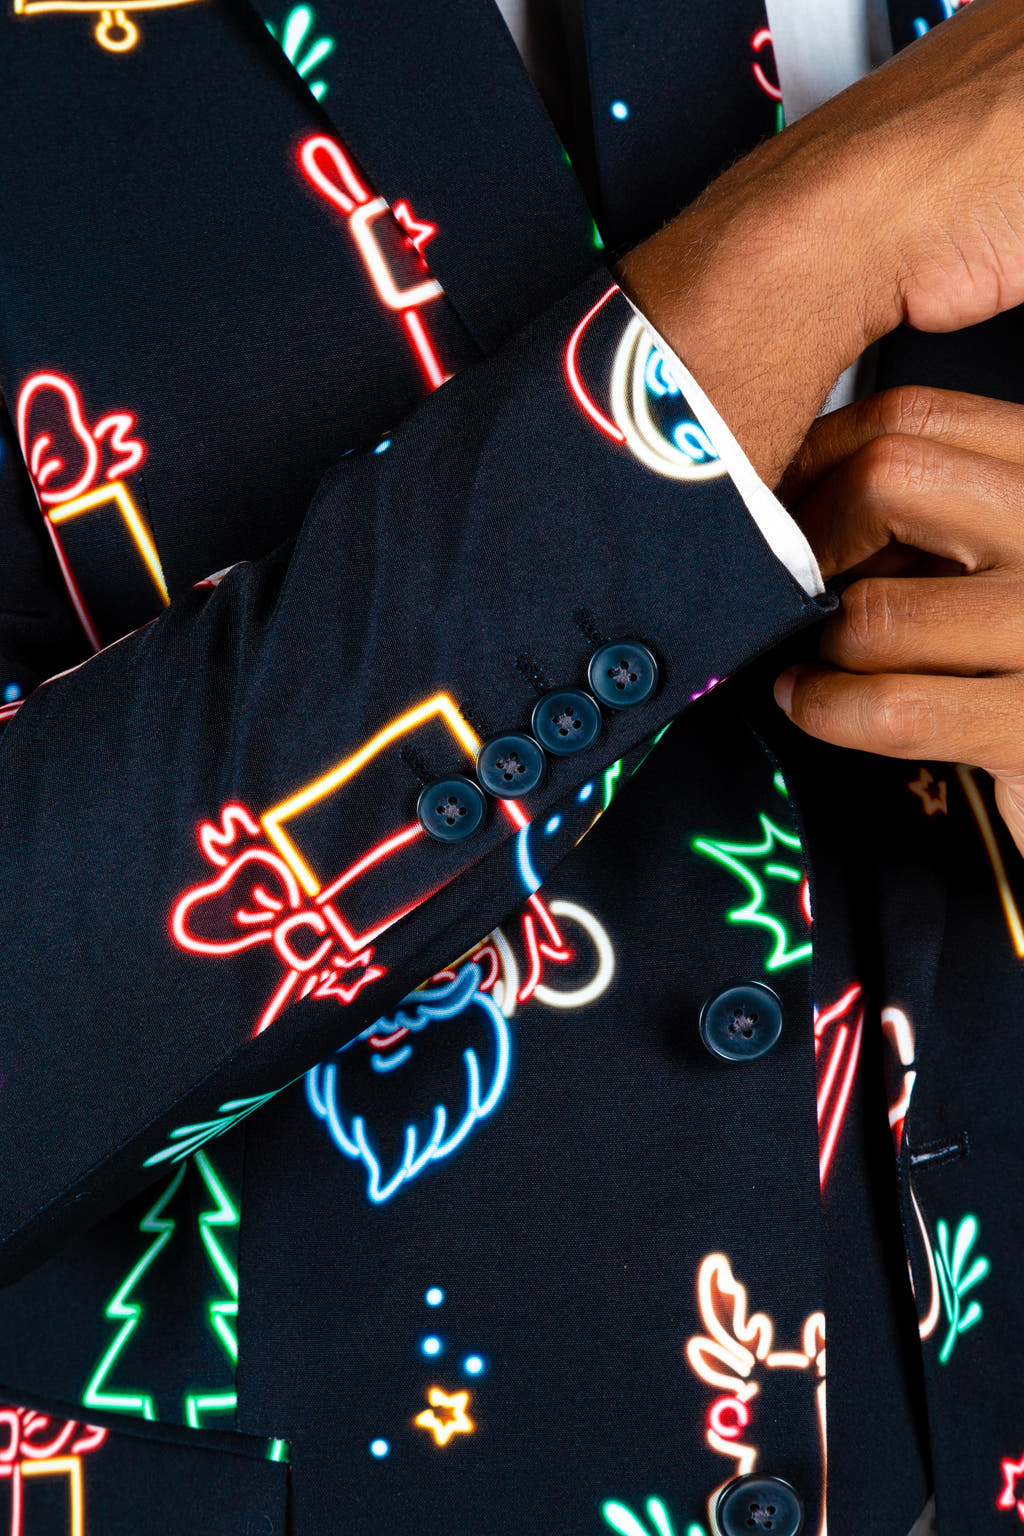 Neon Christmas icon suit